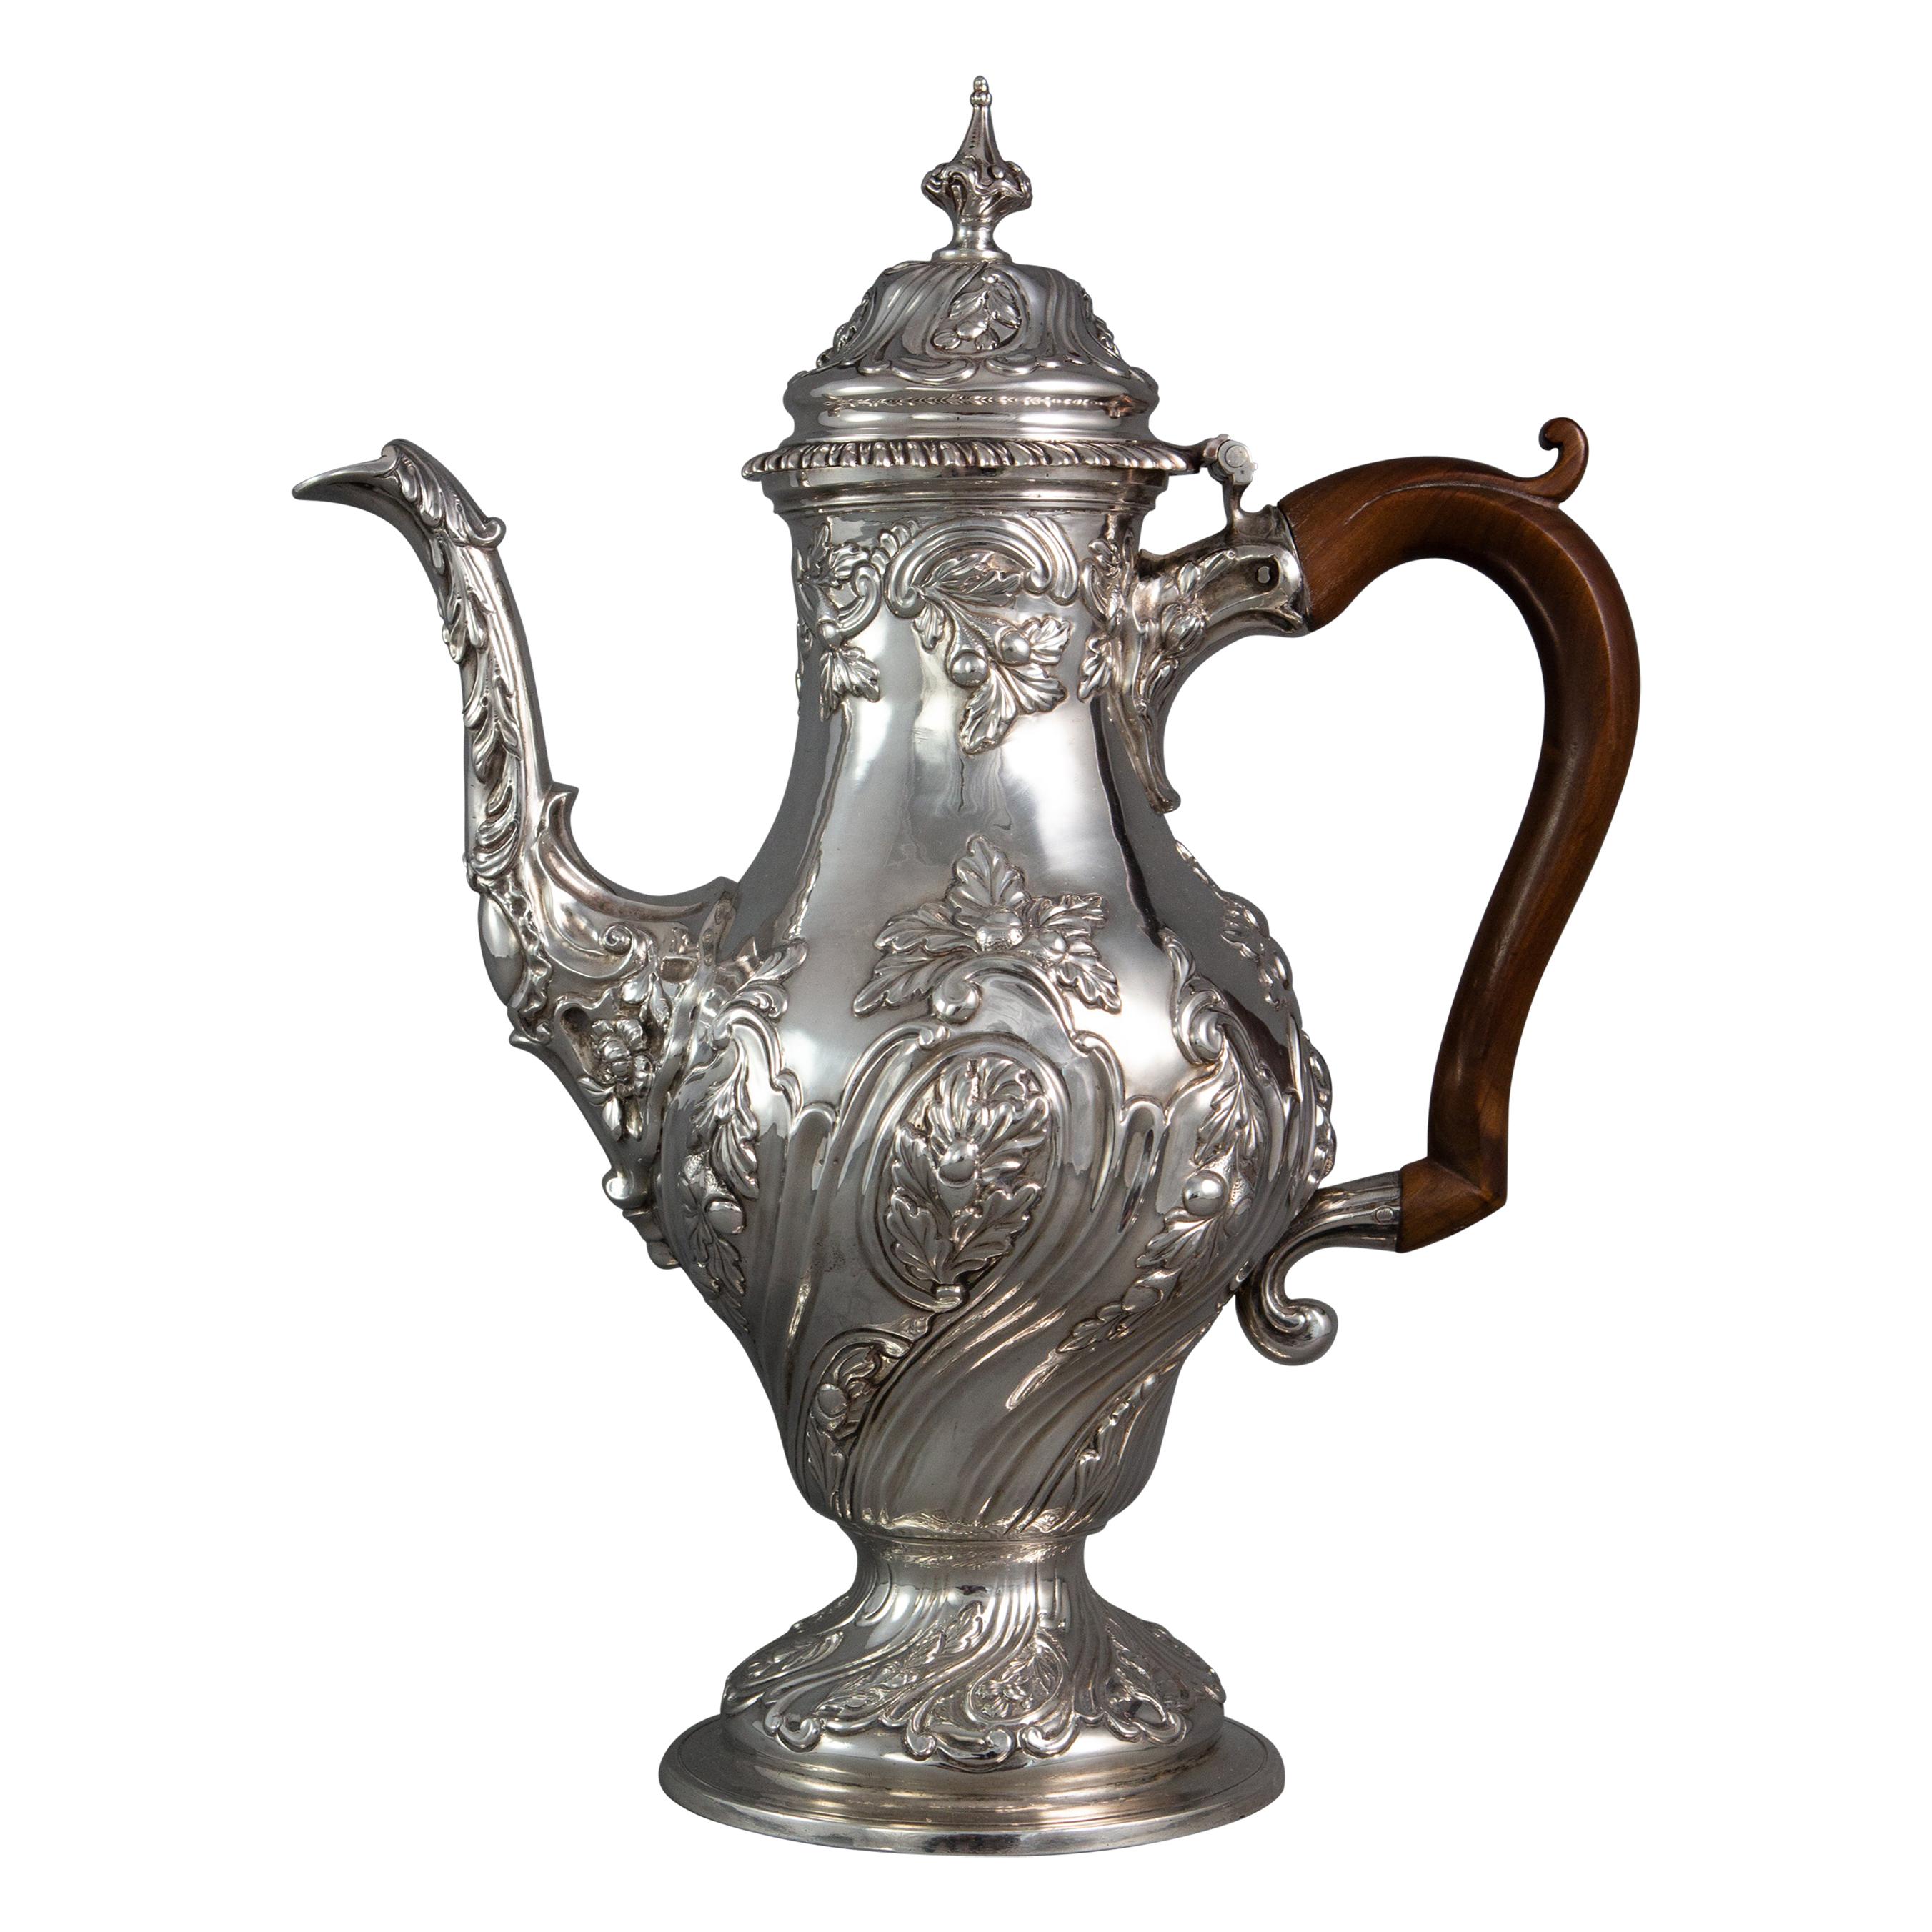 George III Silver Coffee Pot, London 1769 by William Abdy